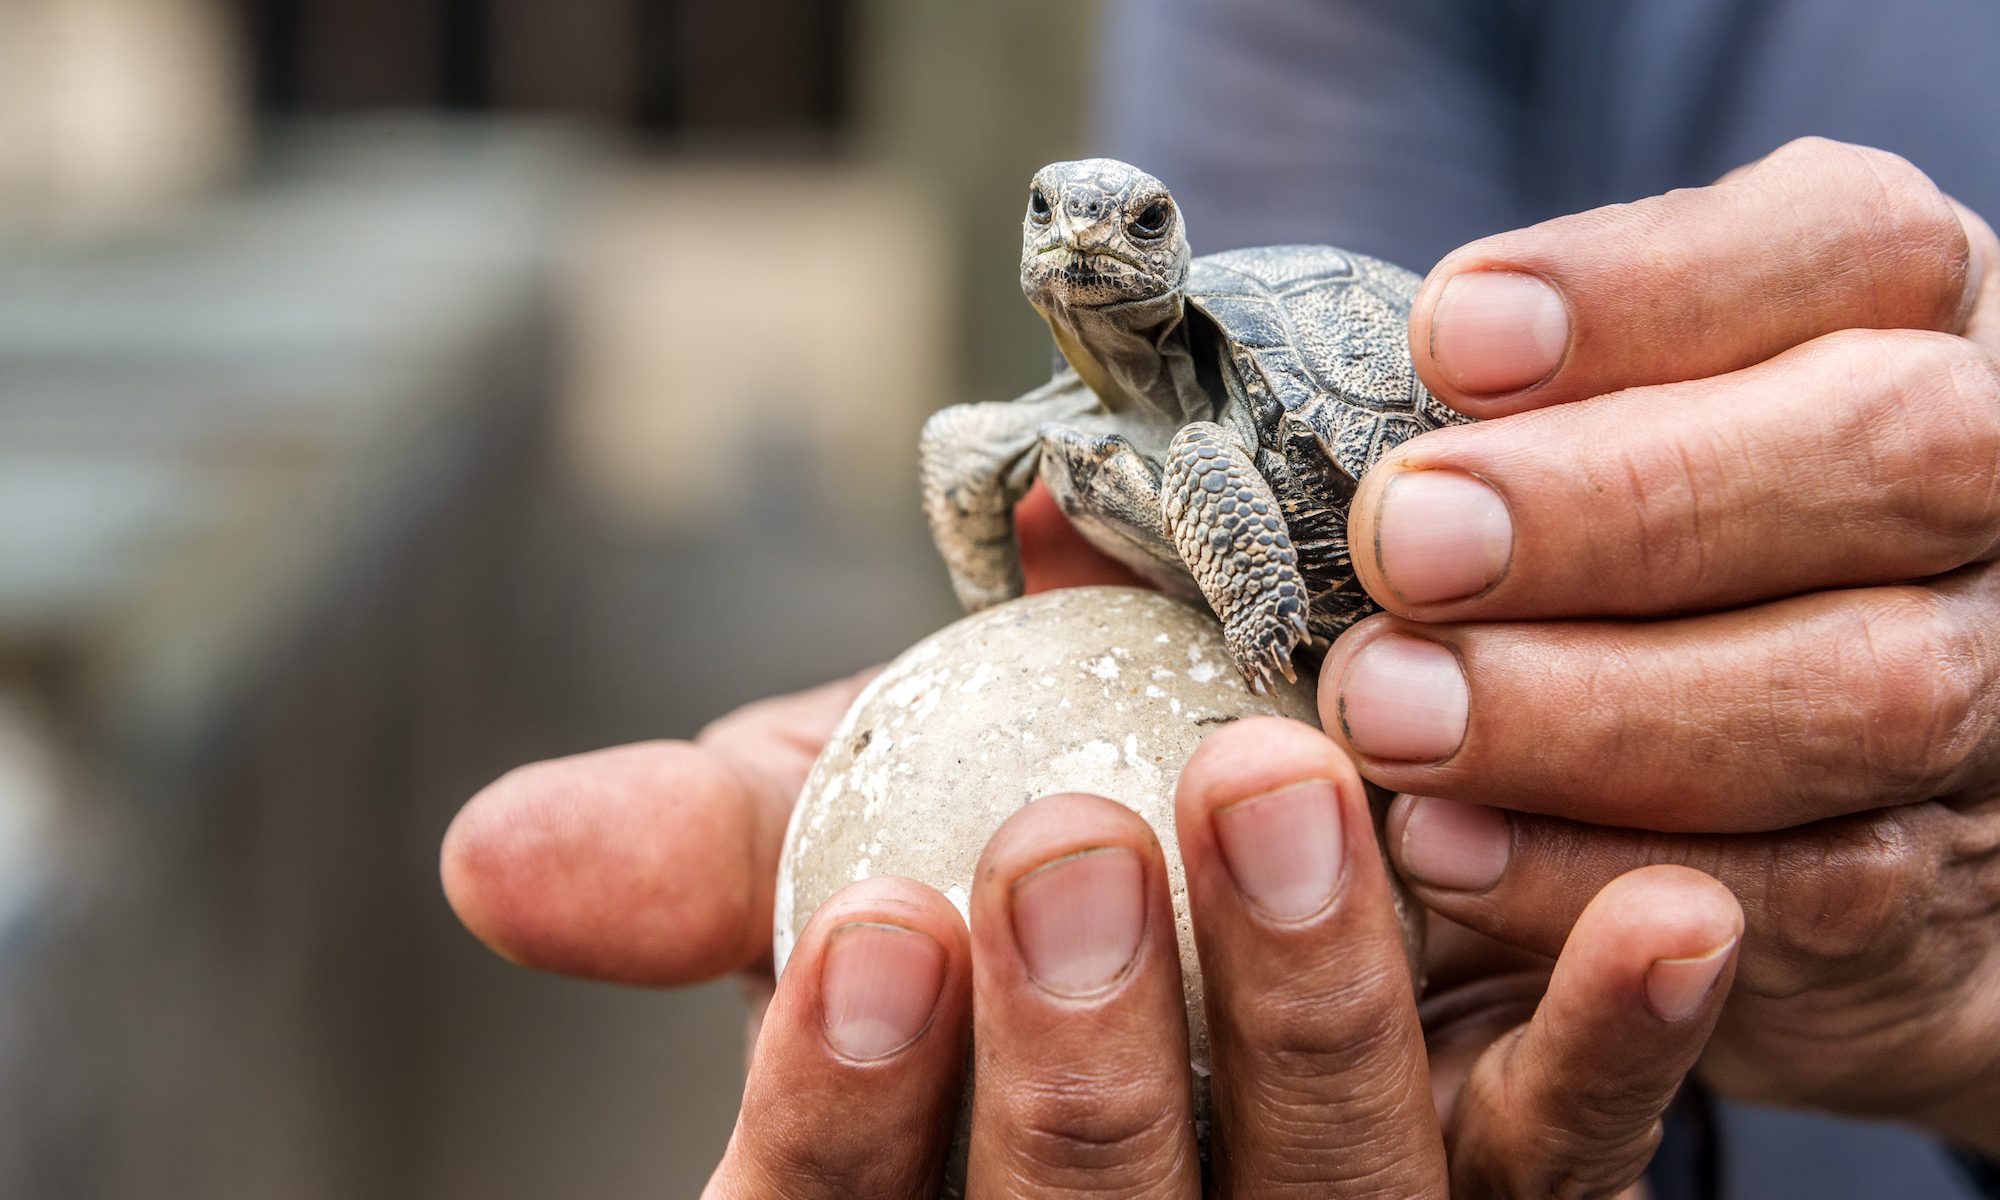 baby Galapagos tortoise sitting on human hands